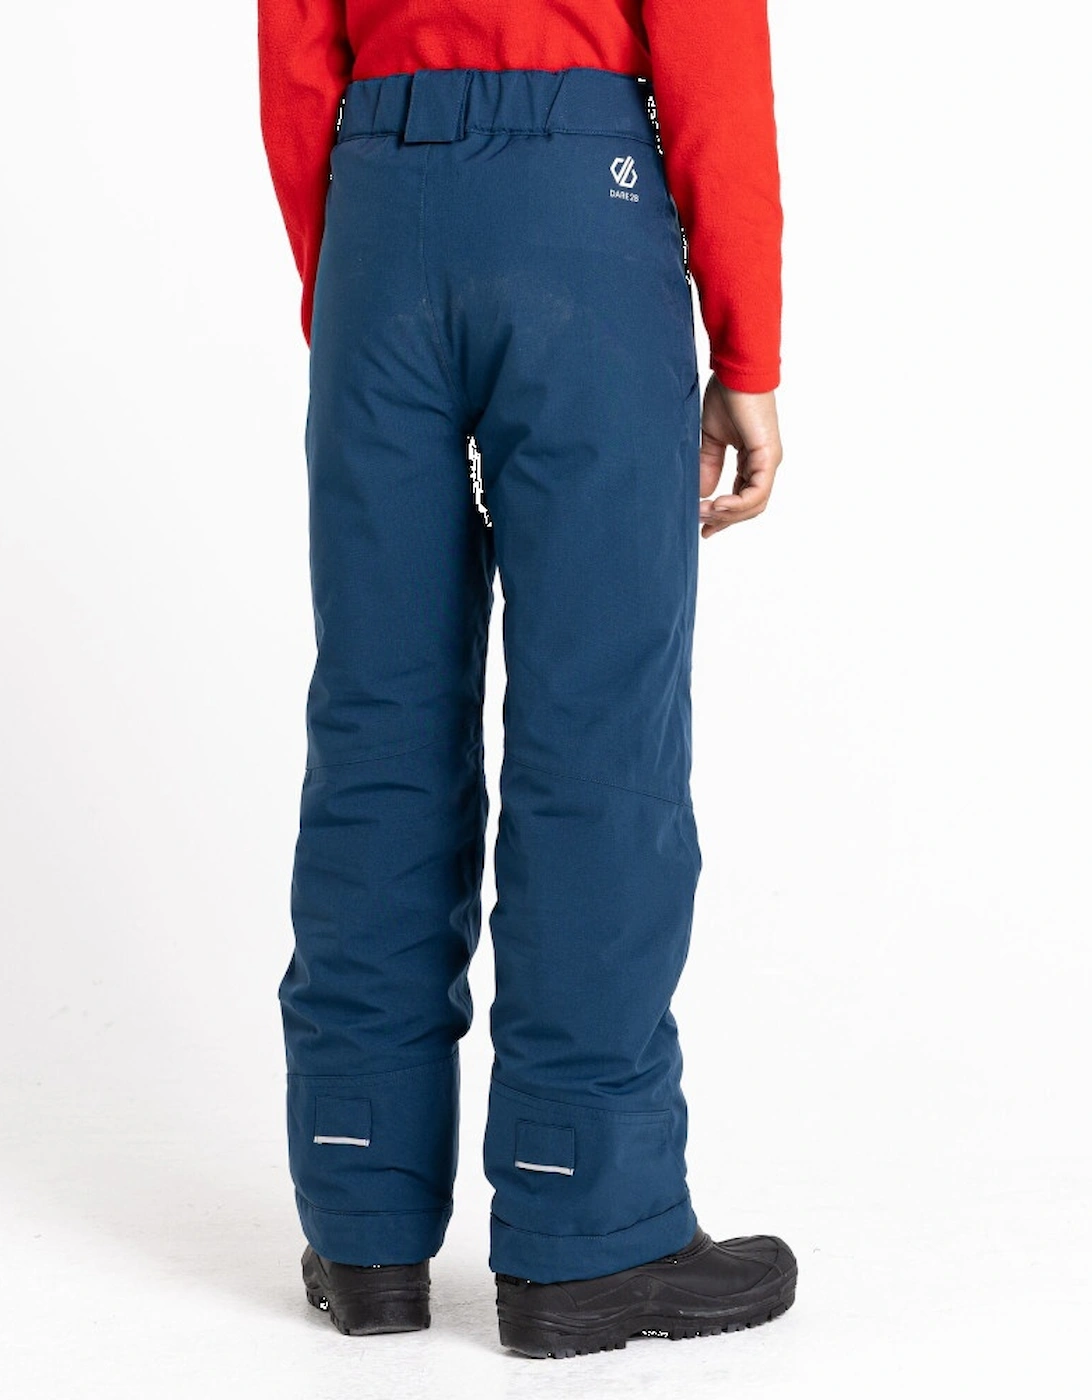 Boys Outmove II Waterproof Breathable Ski Pants